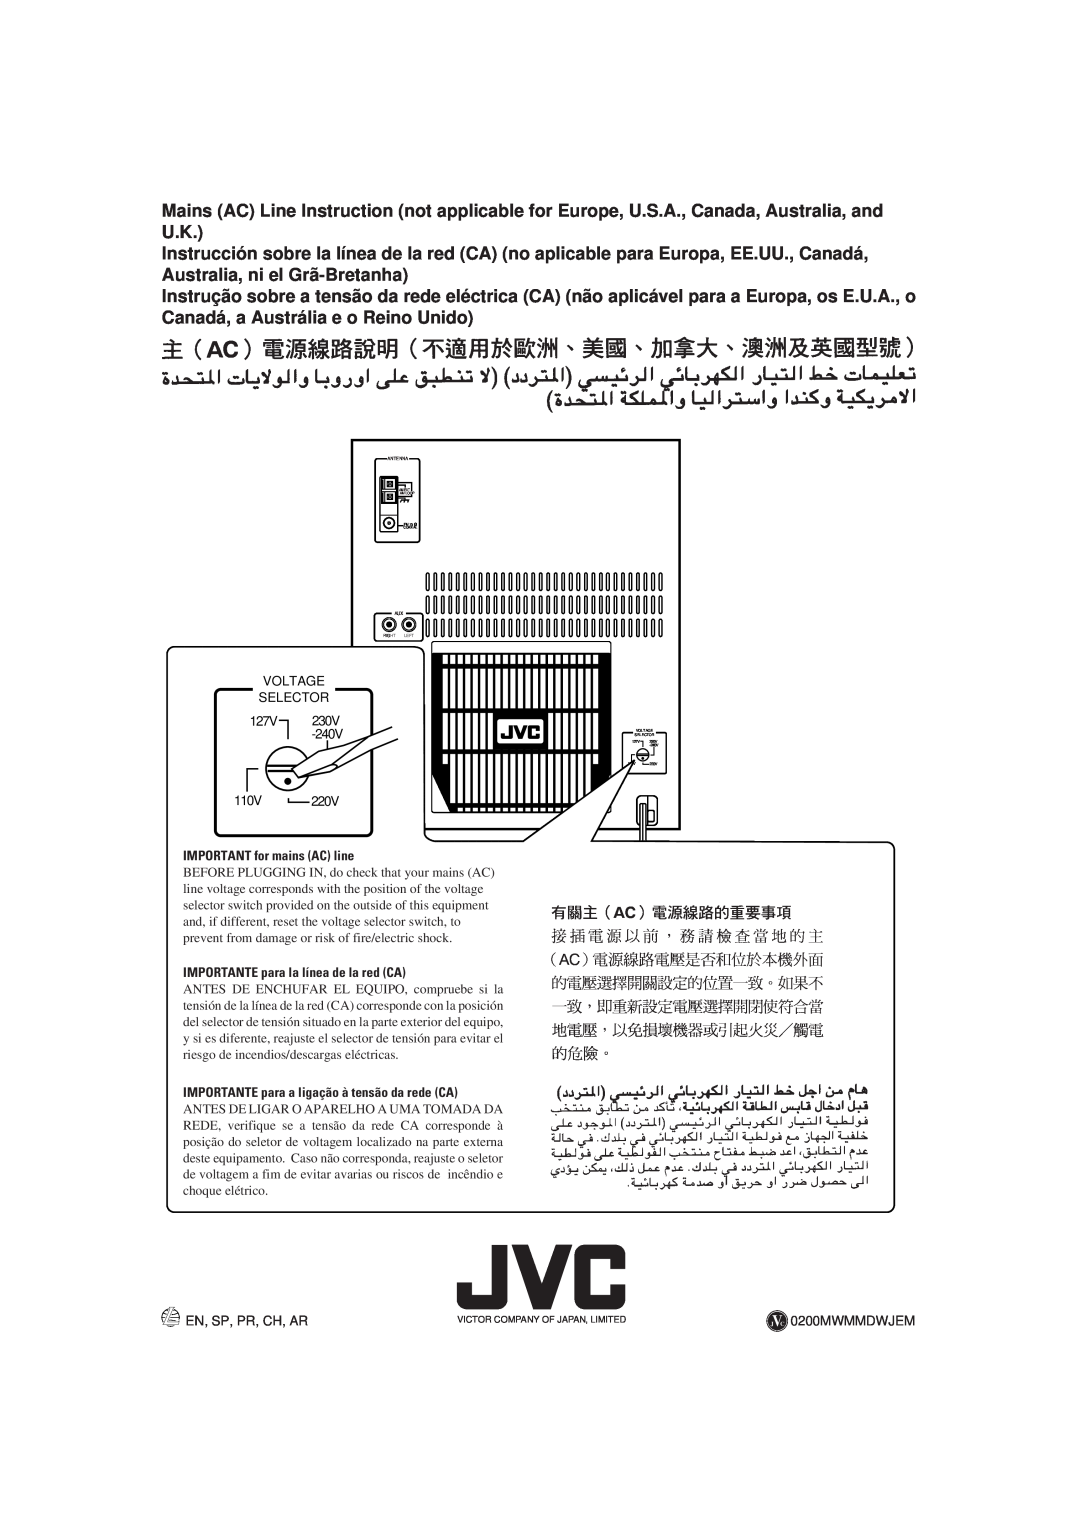 JVC CA-MXJ700, GVT0030-003A manual IMPORTANT for mains AC line, IMPORTANTE para la línea de la red CA, JVC 0200MWMMDWJEM 